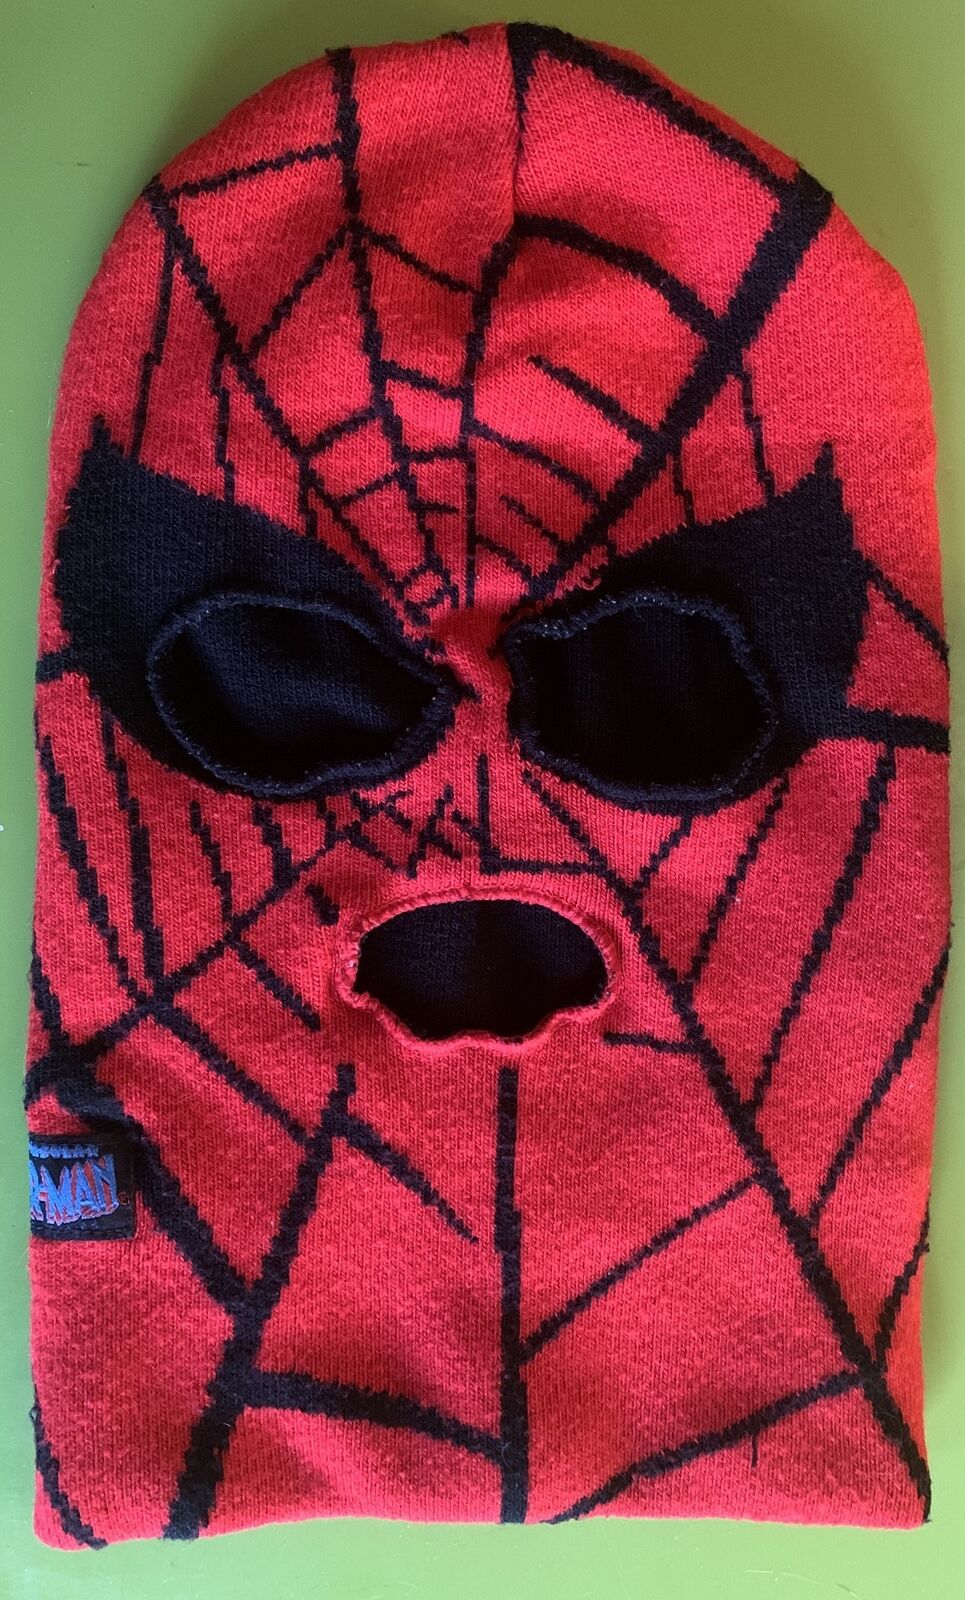 Marvel’s Spectacular Spiderman Baklava Beanie Hat Knit Ski Mask - Awesome